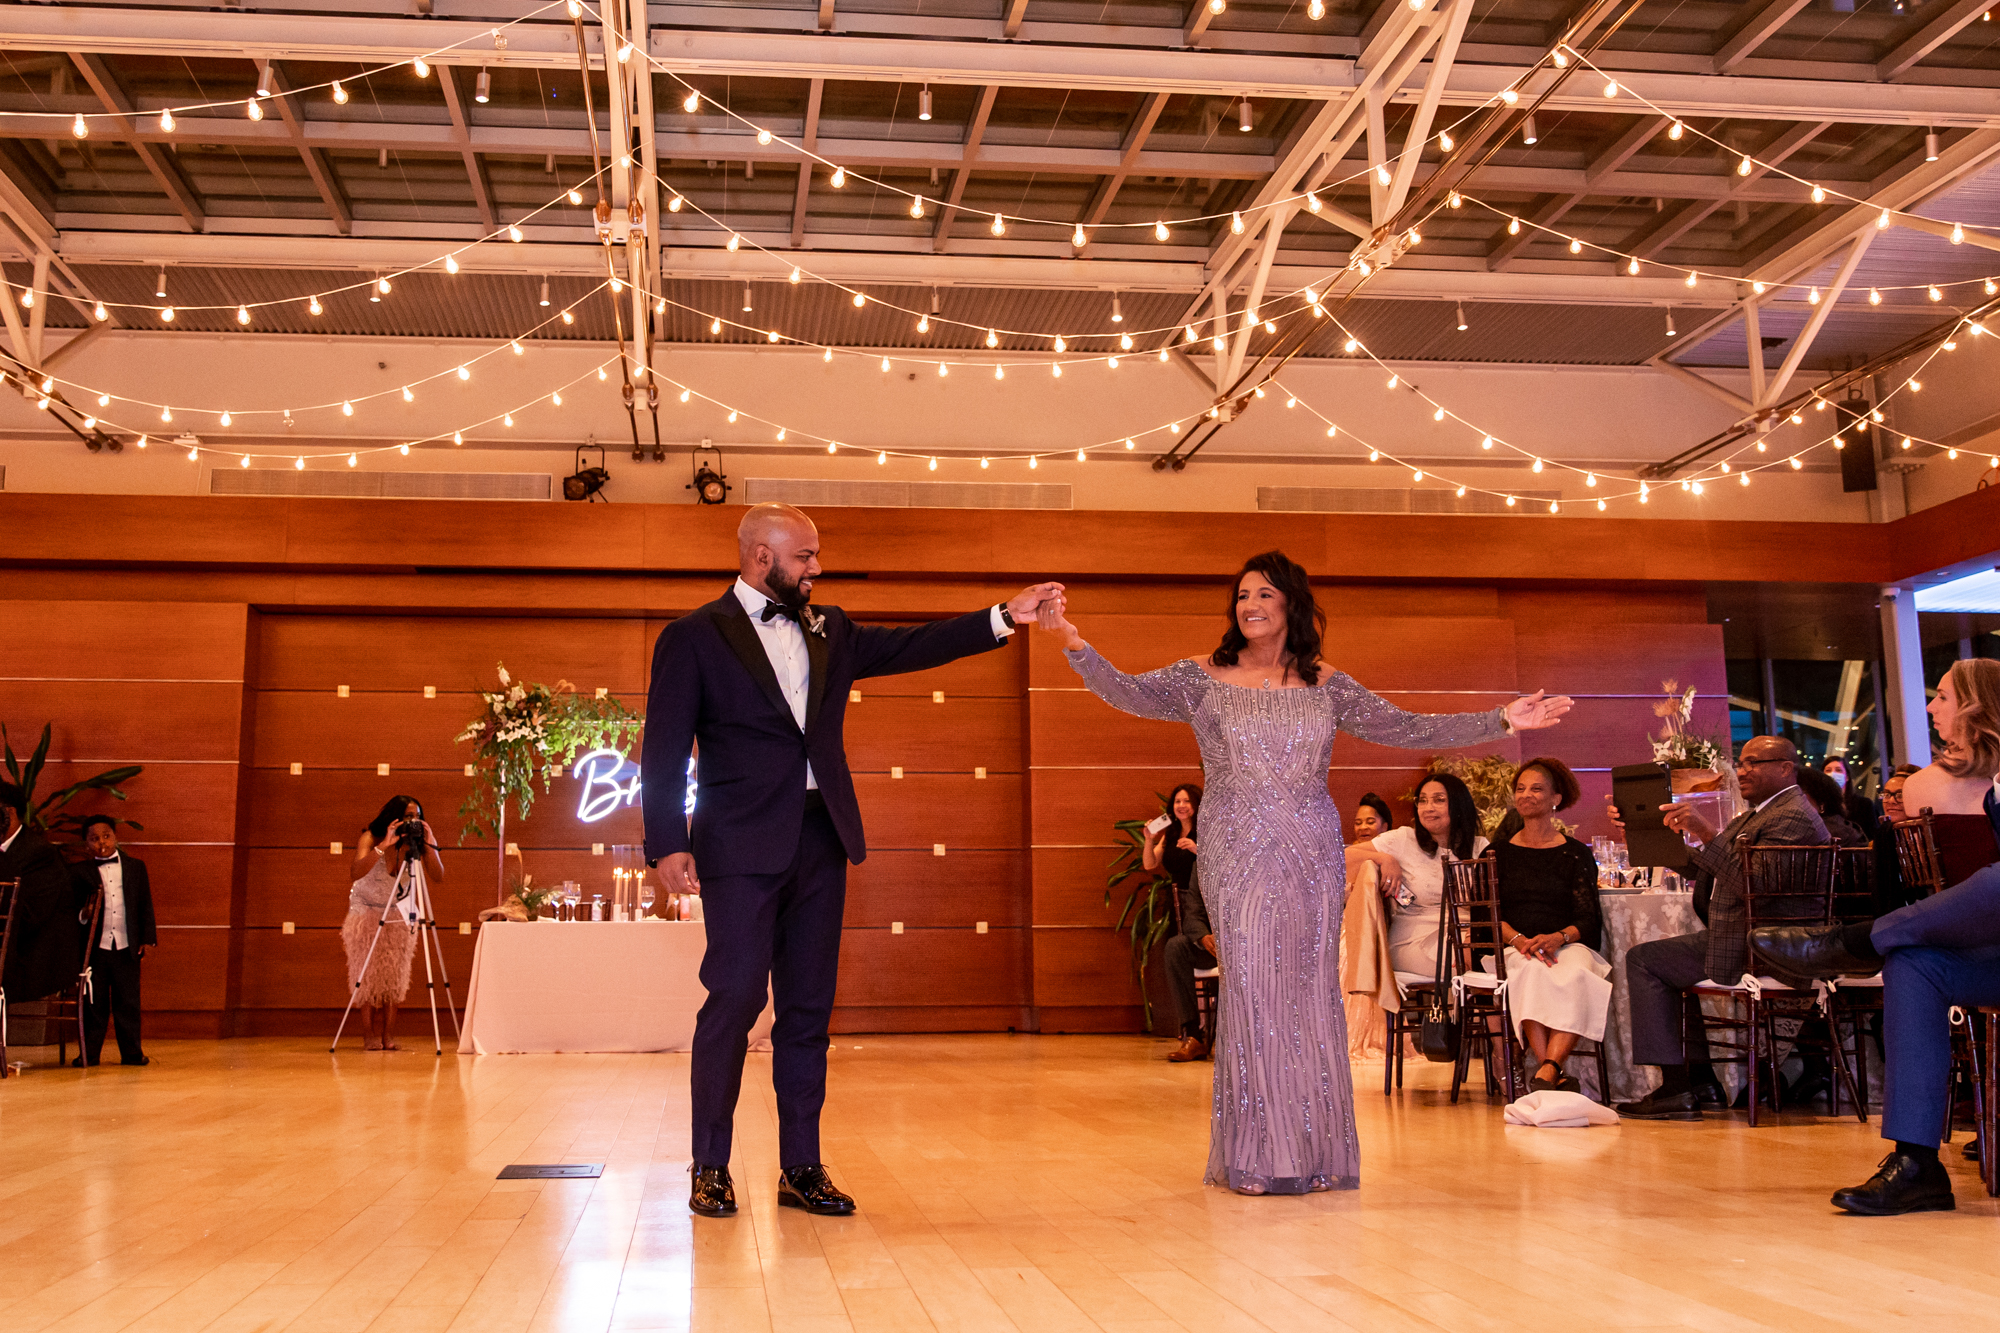 mother son dance at a kimmel center wedding reception